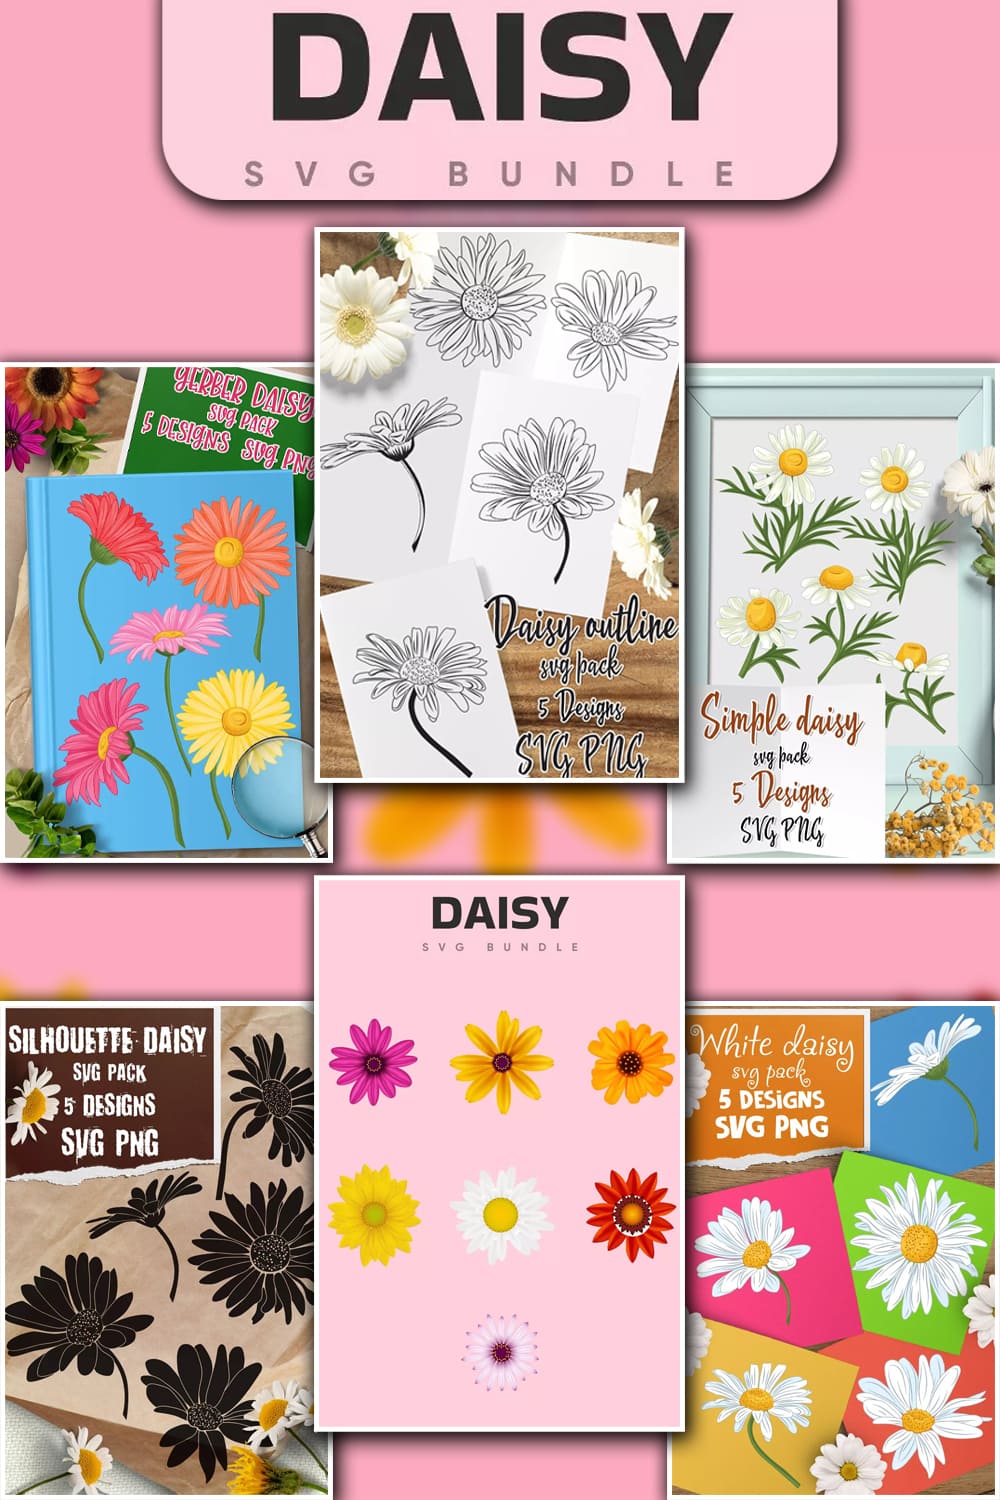 Daisy SVG Bundle Pinterest.